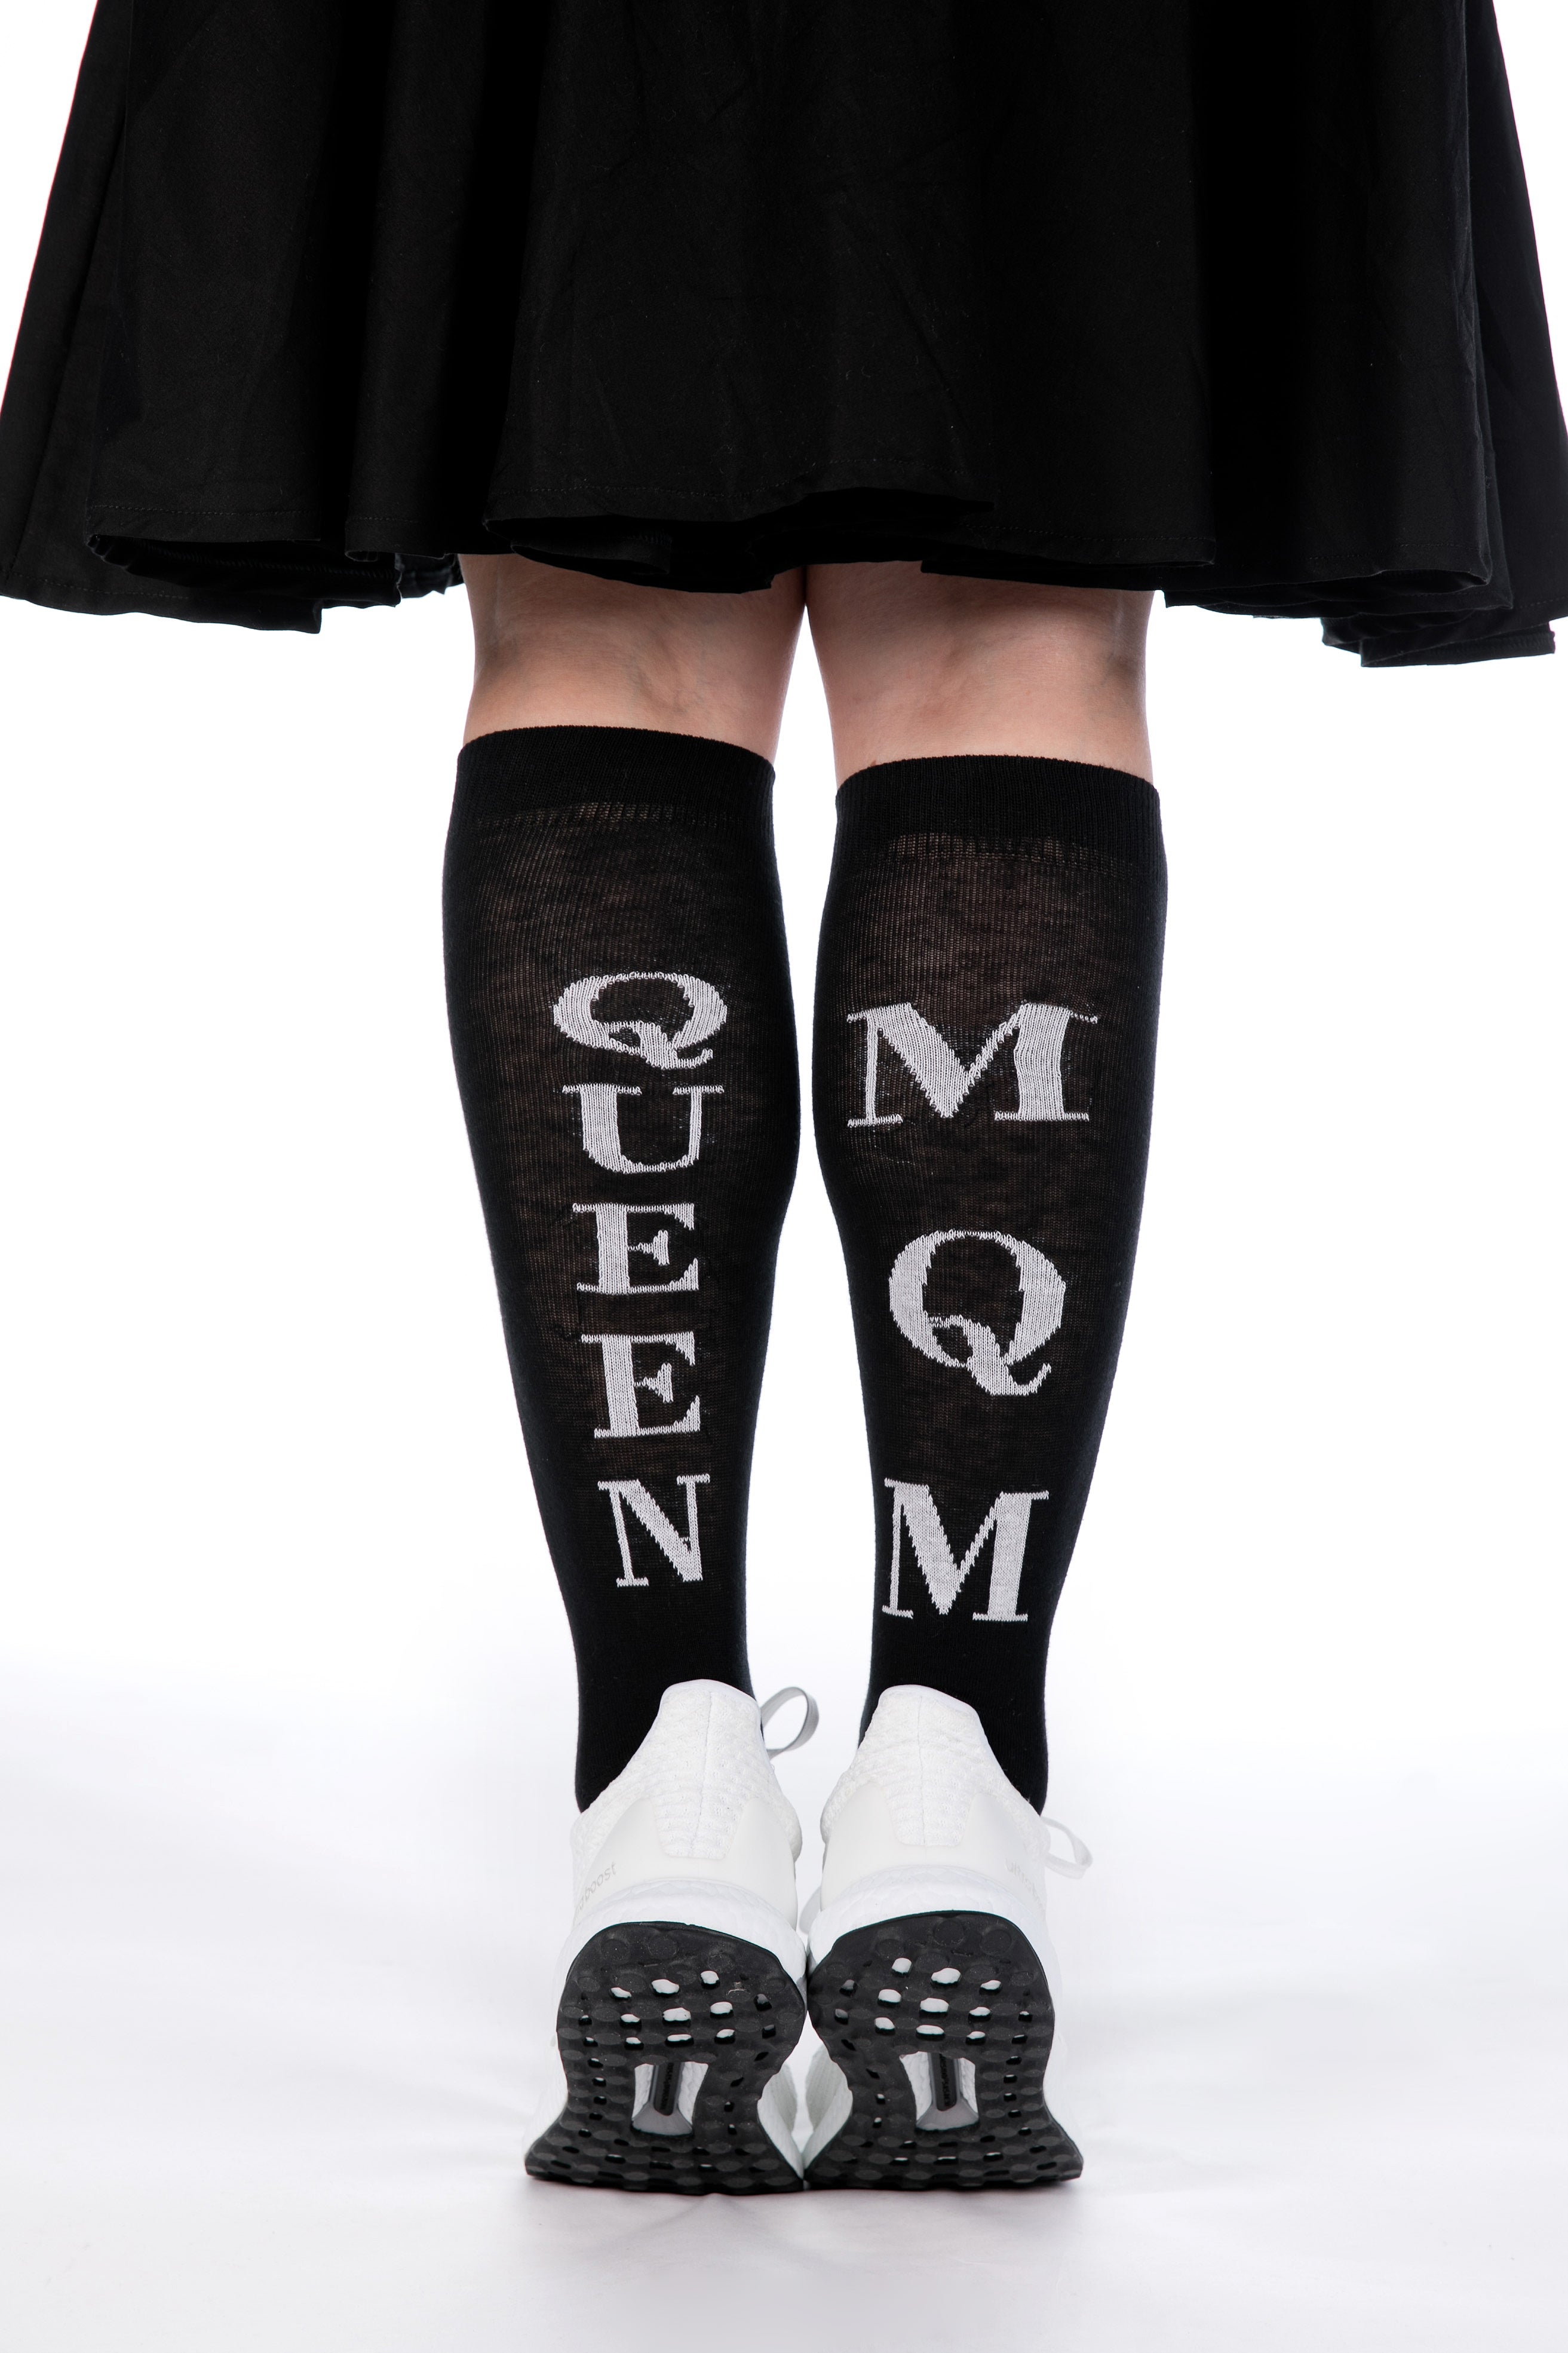 MariaQueenMaria Black Socks